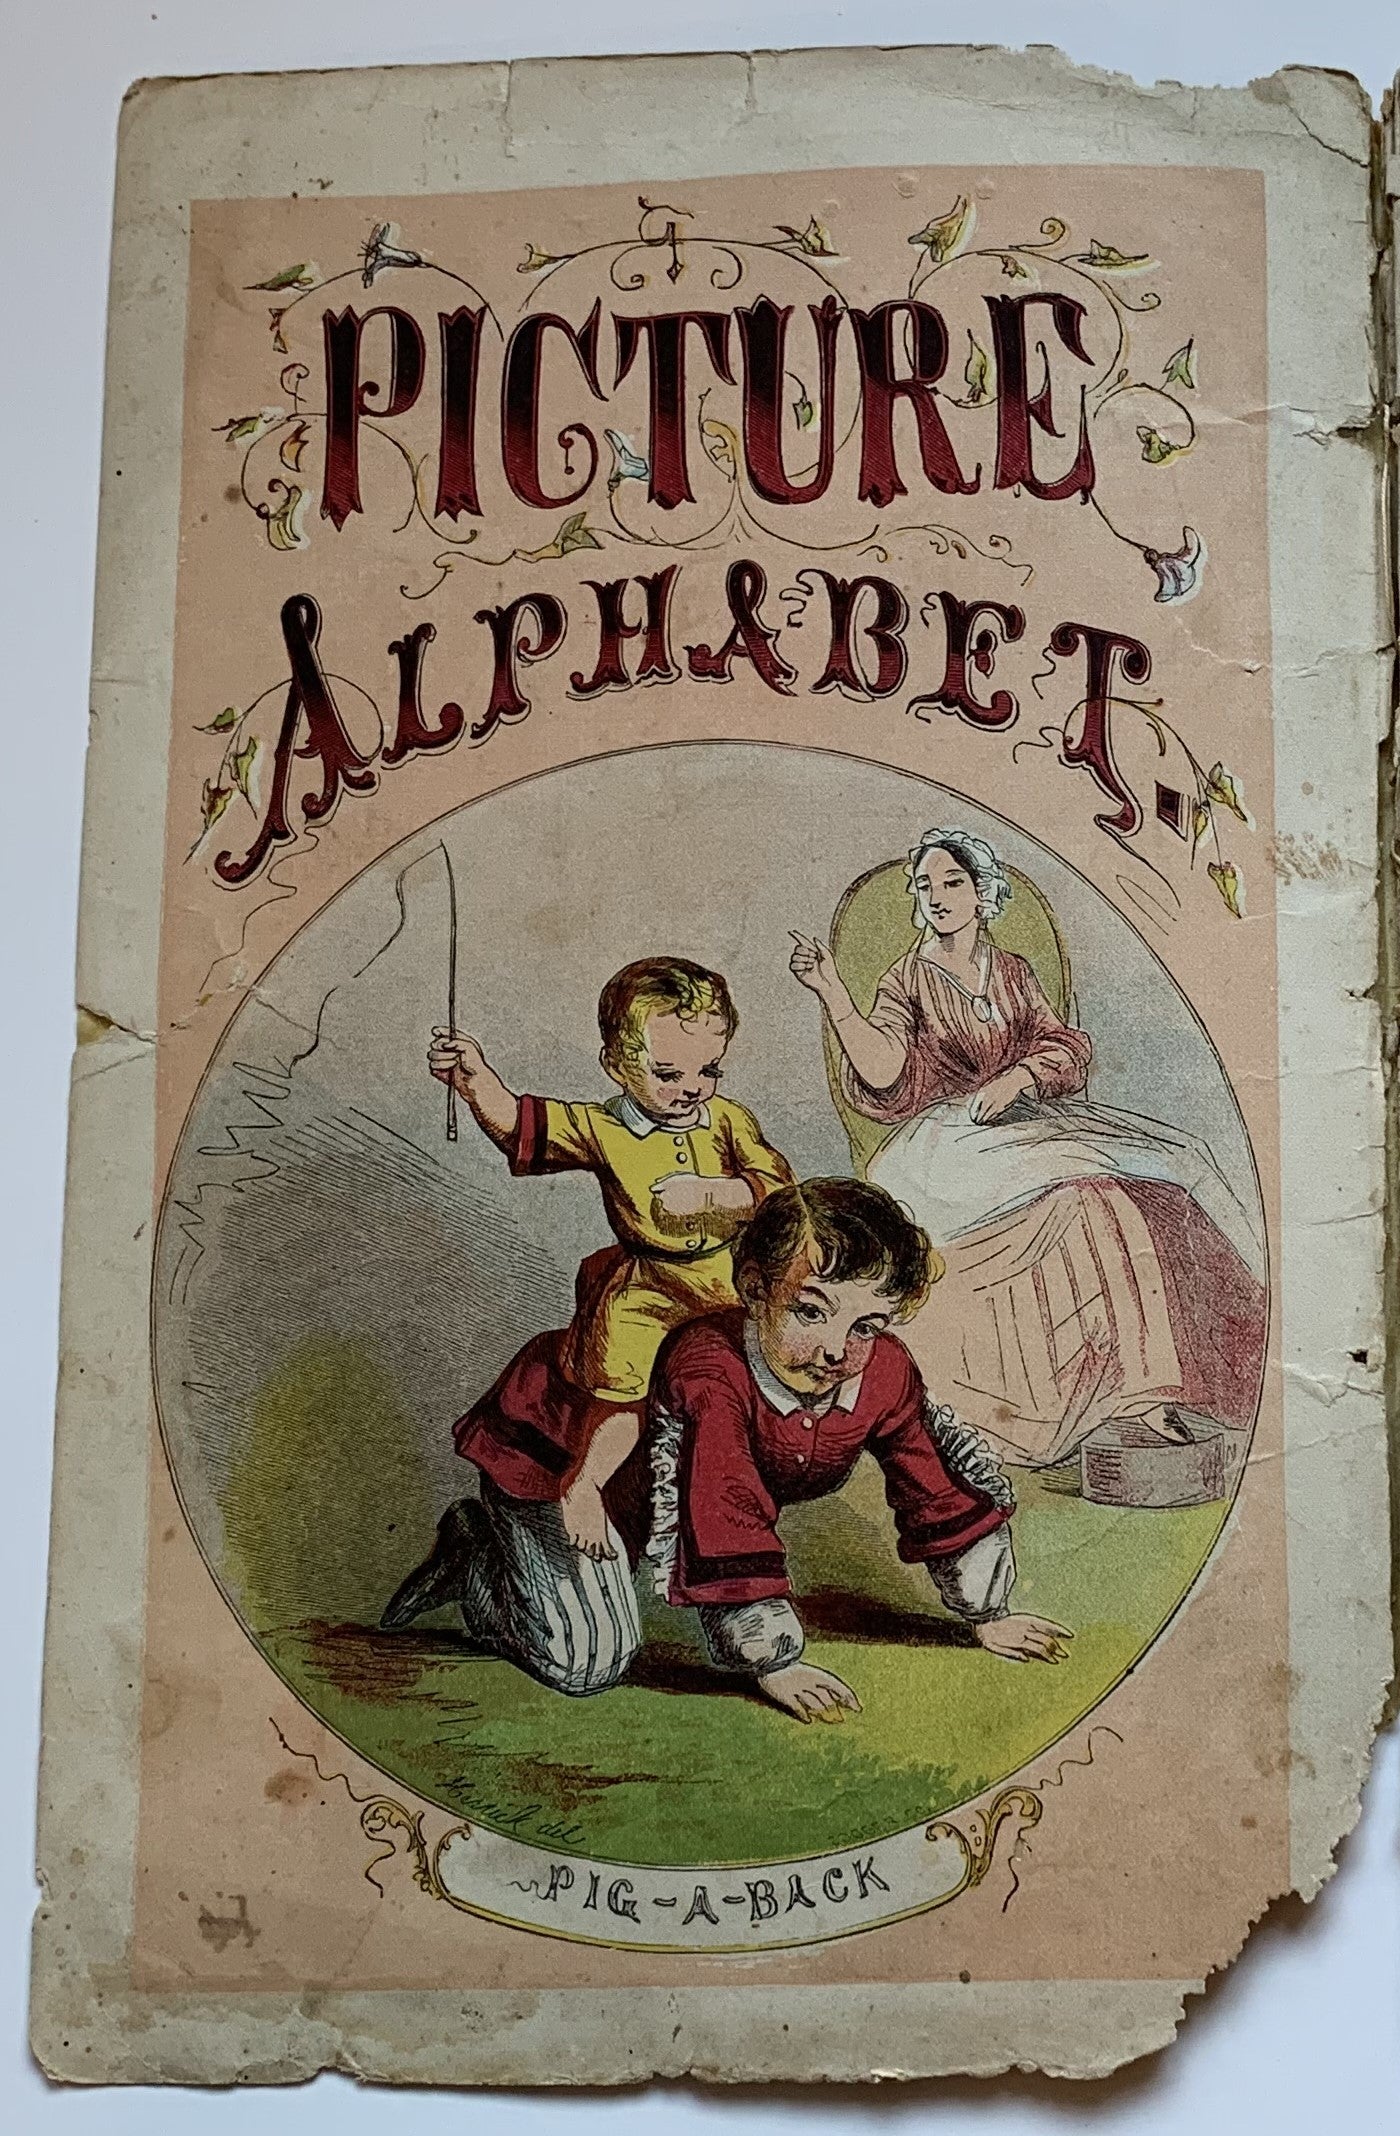 The Picture Alphabet